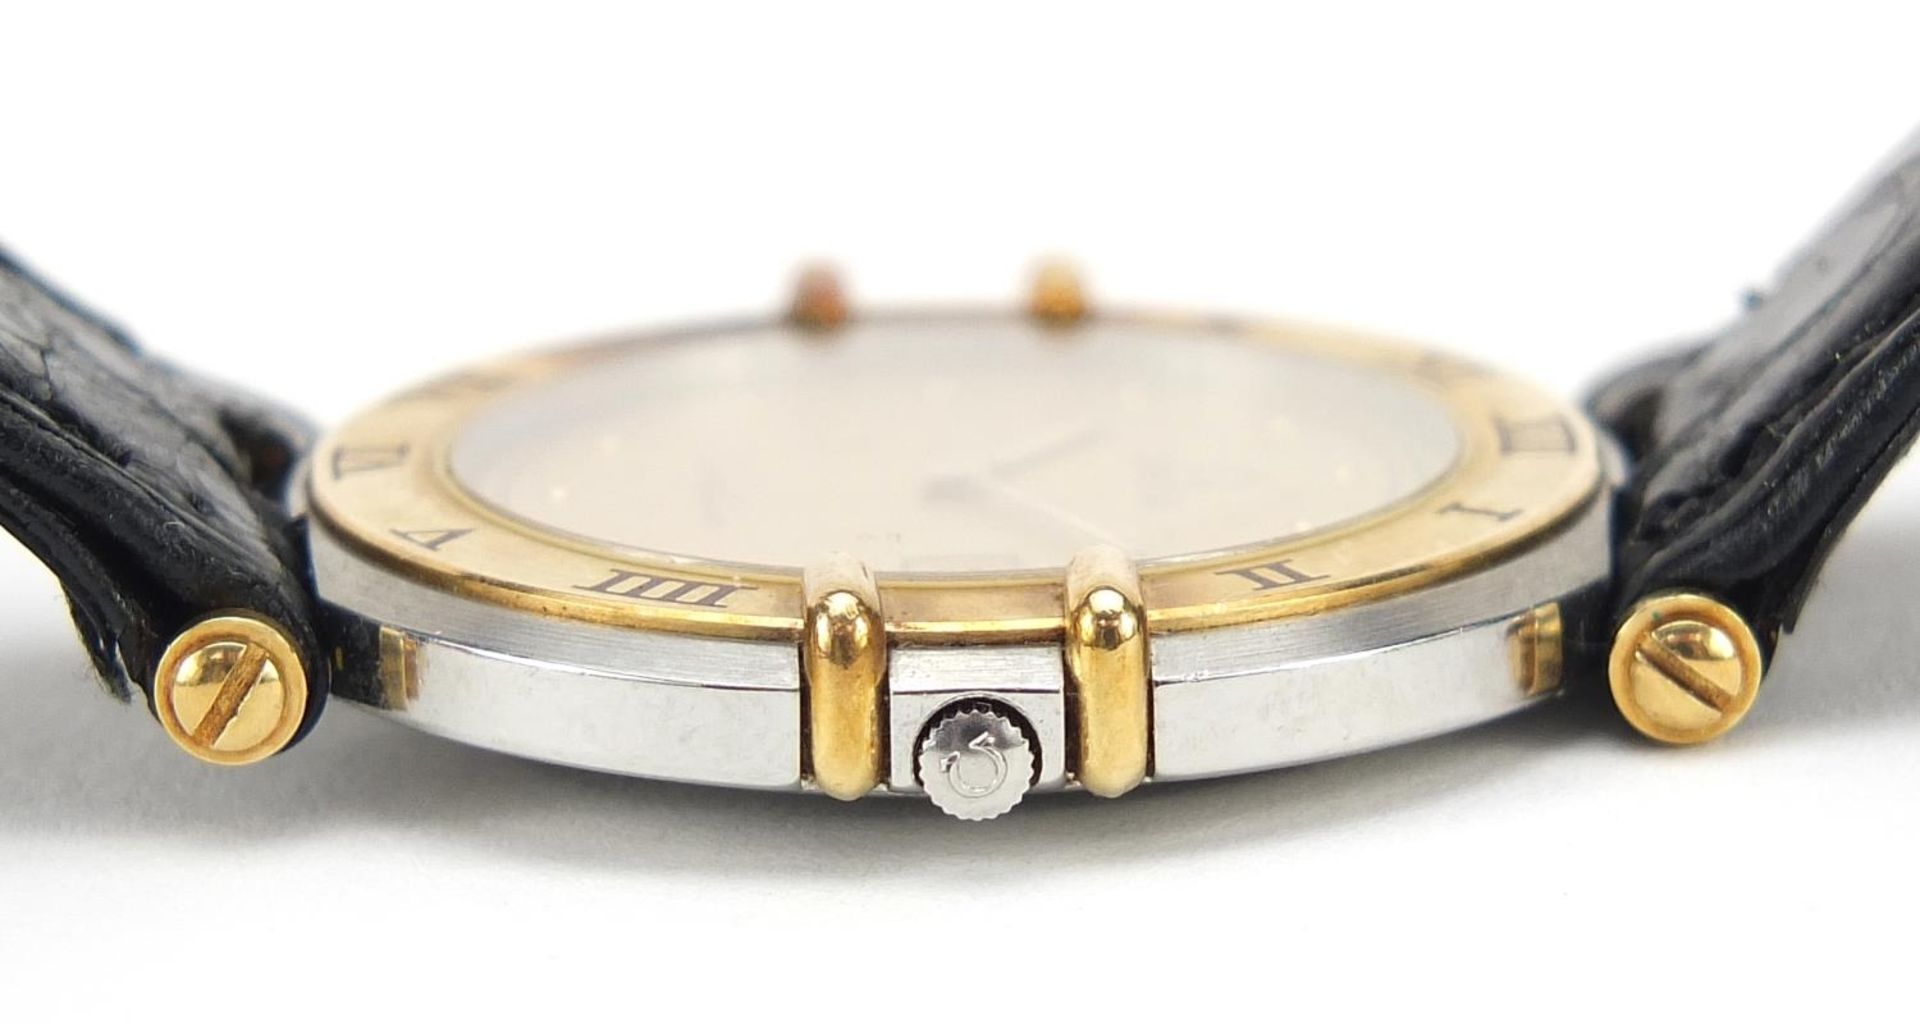 Omega Constellation gentlemen's wristwatch with date aperture, 32mm in diameter - Image 4 of 6